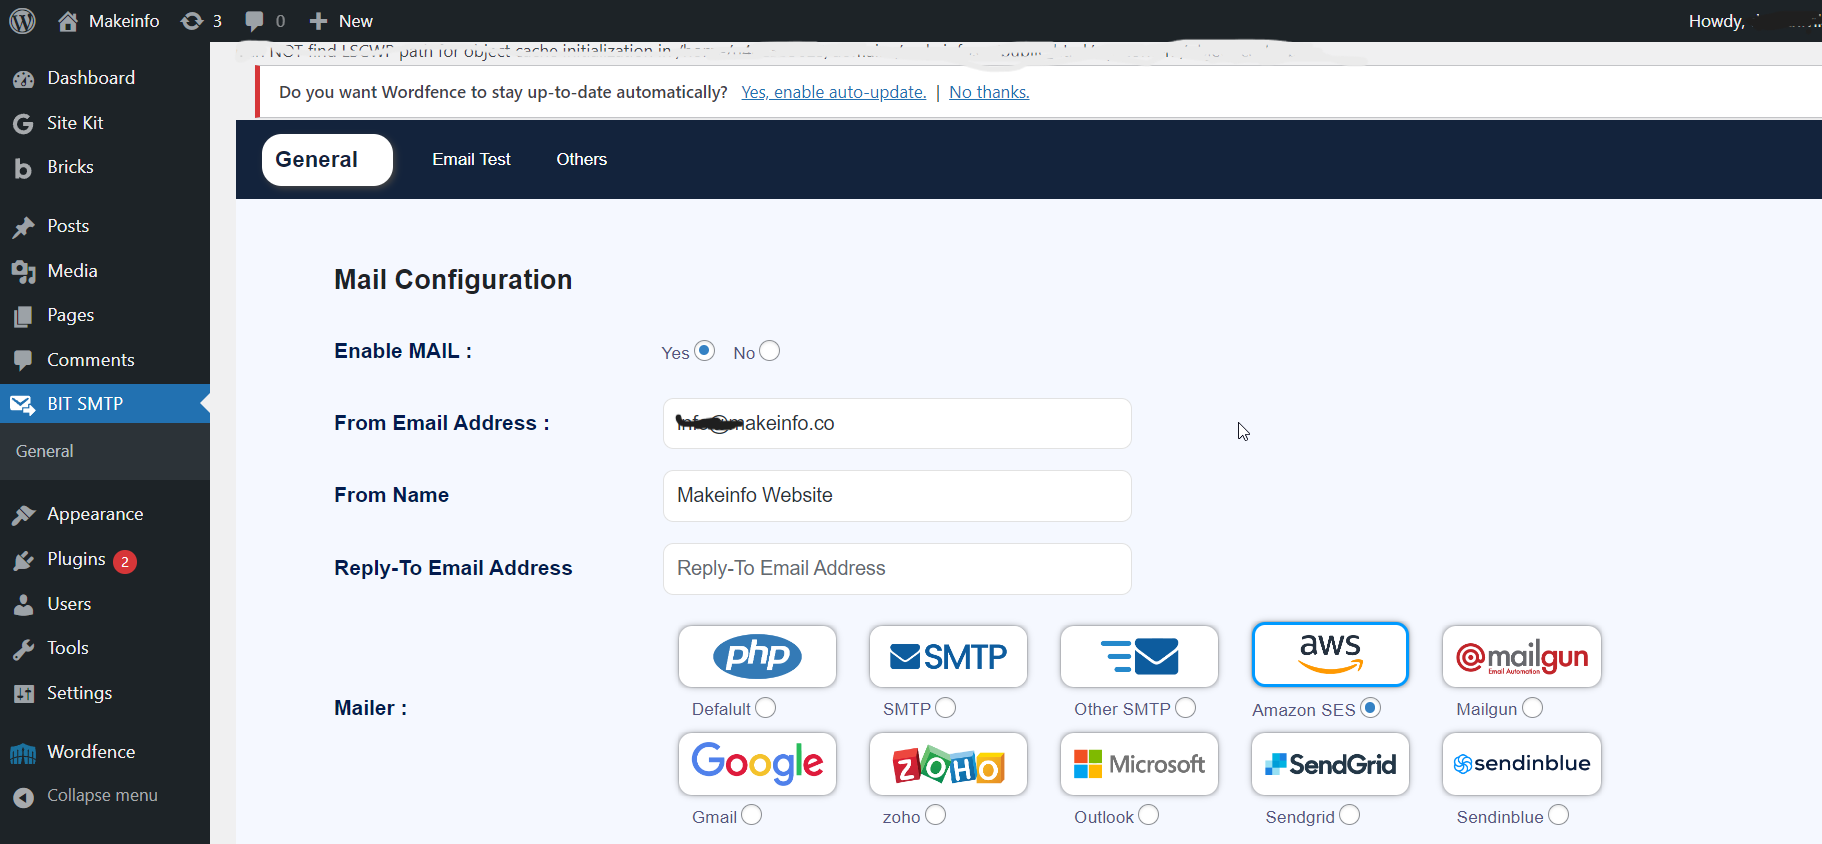 Send Email form Wordpress using Bit SMTP